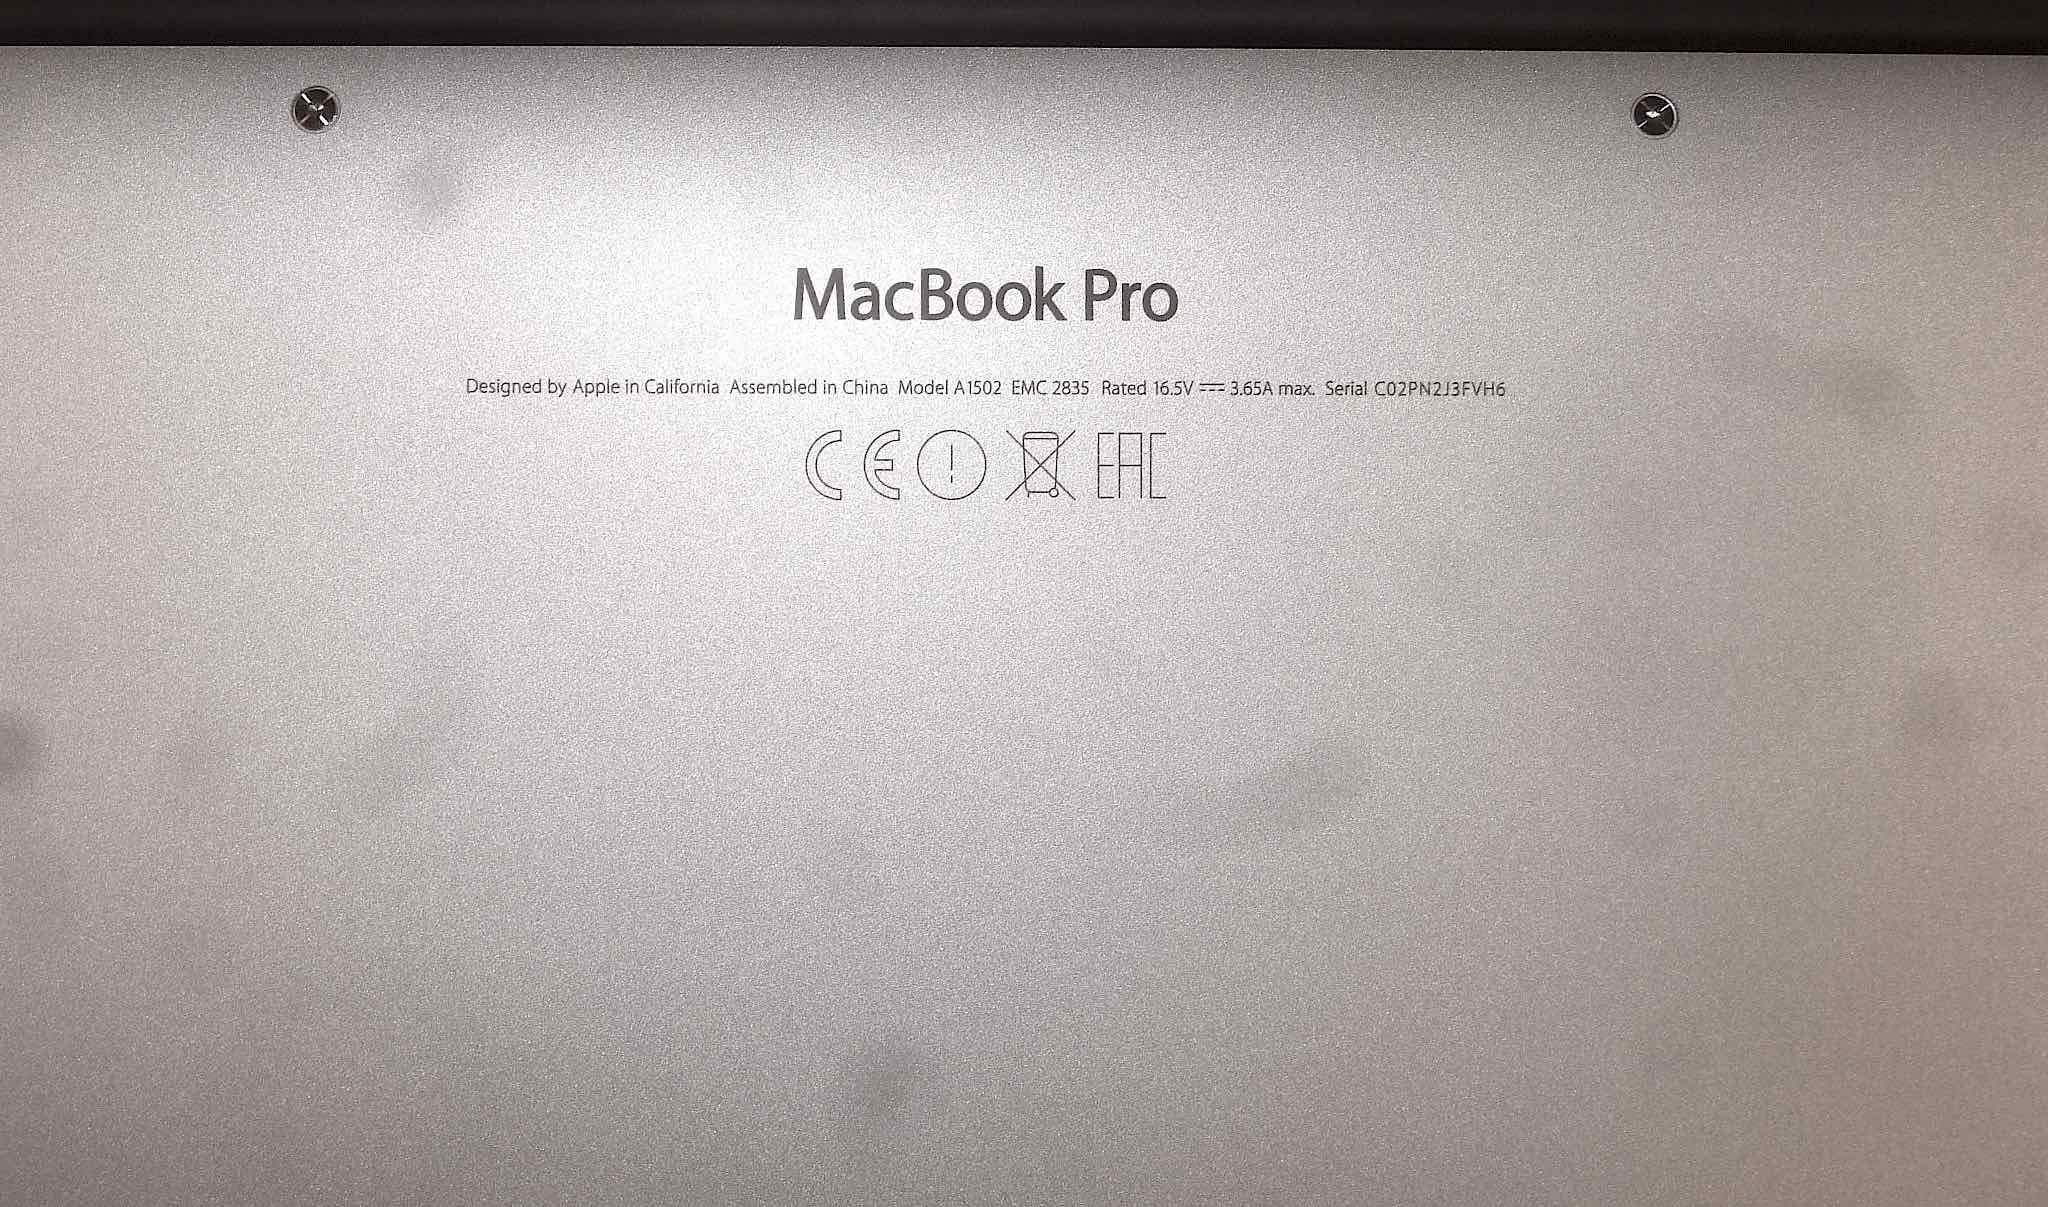 [ image 3C ] MacBook Pro: bottom text